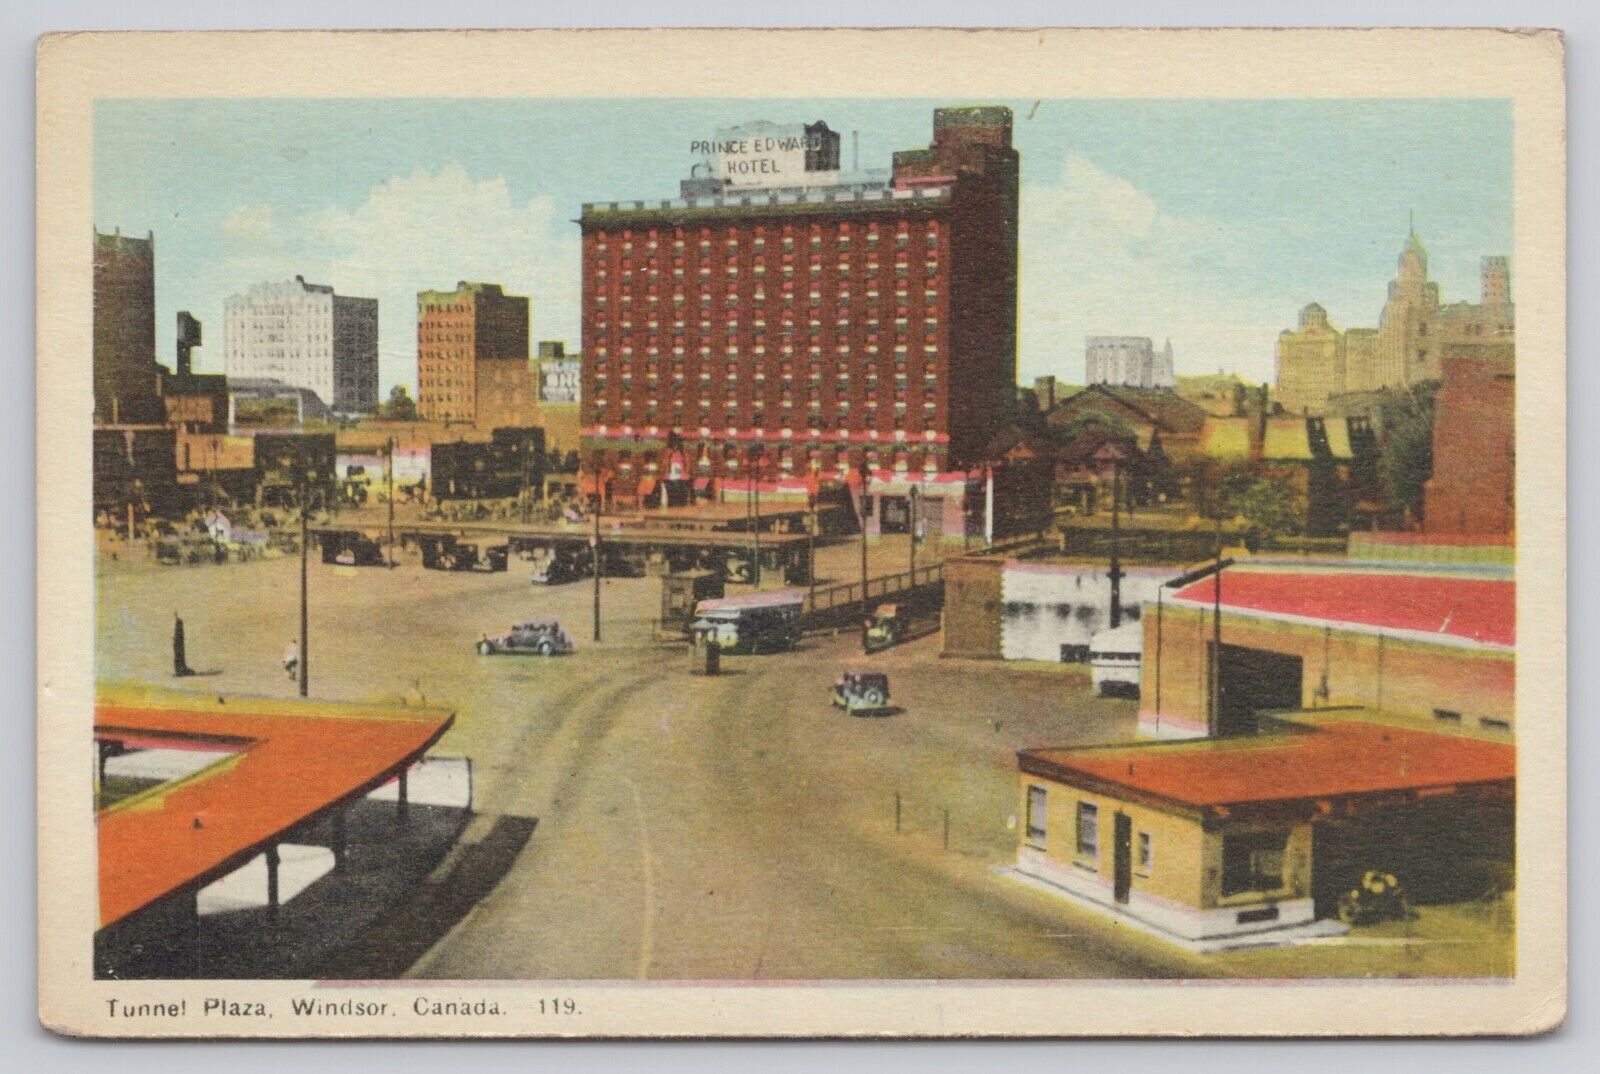 Windsor Canada - Tunnel Plaza Prince Edward Hotel Vintage Postcard